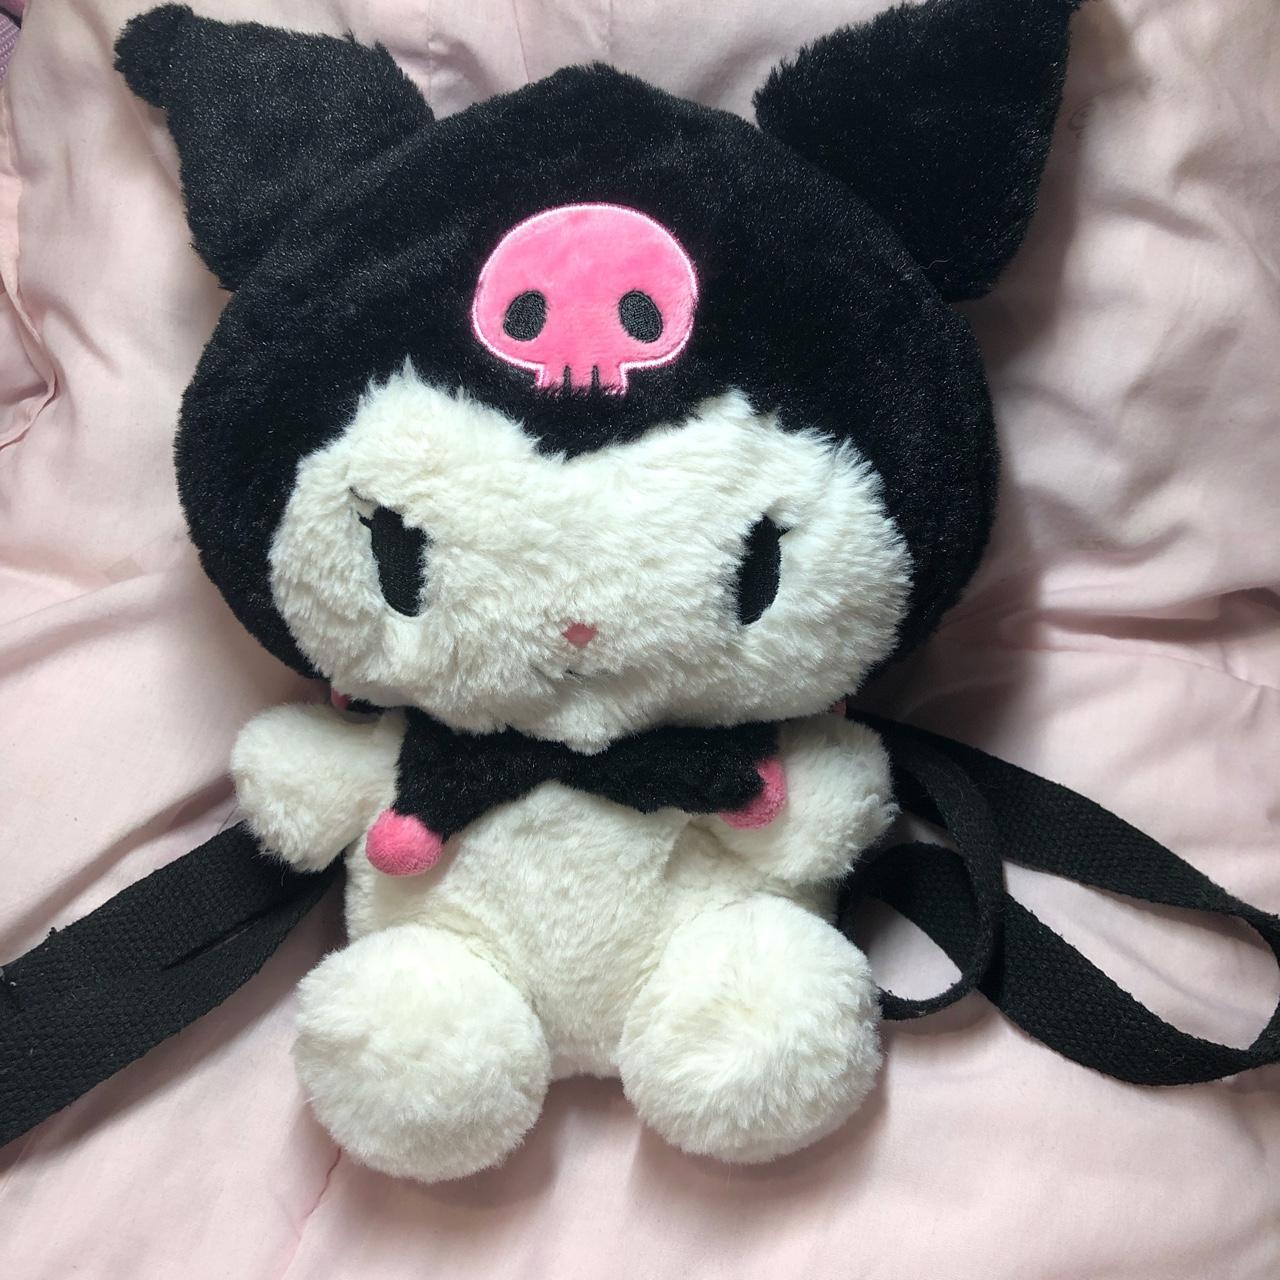 Sanrio My Melody plush backpack gothic lolita - Depop